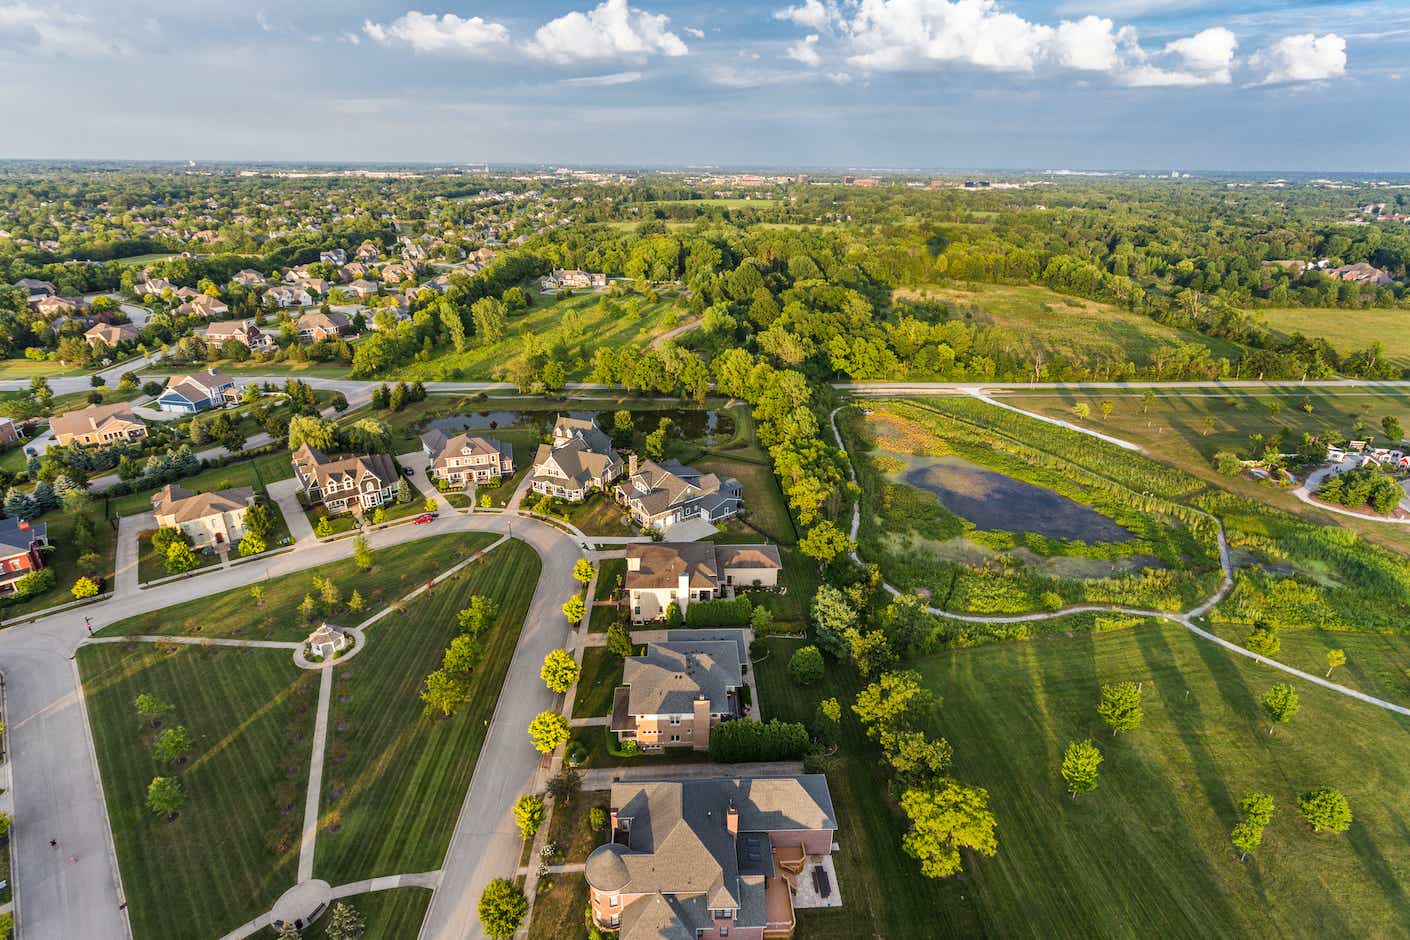 An aerial shot of a leafy, green suburban neighborhood in Carmel, Indiana.